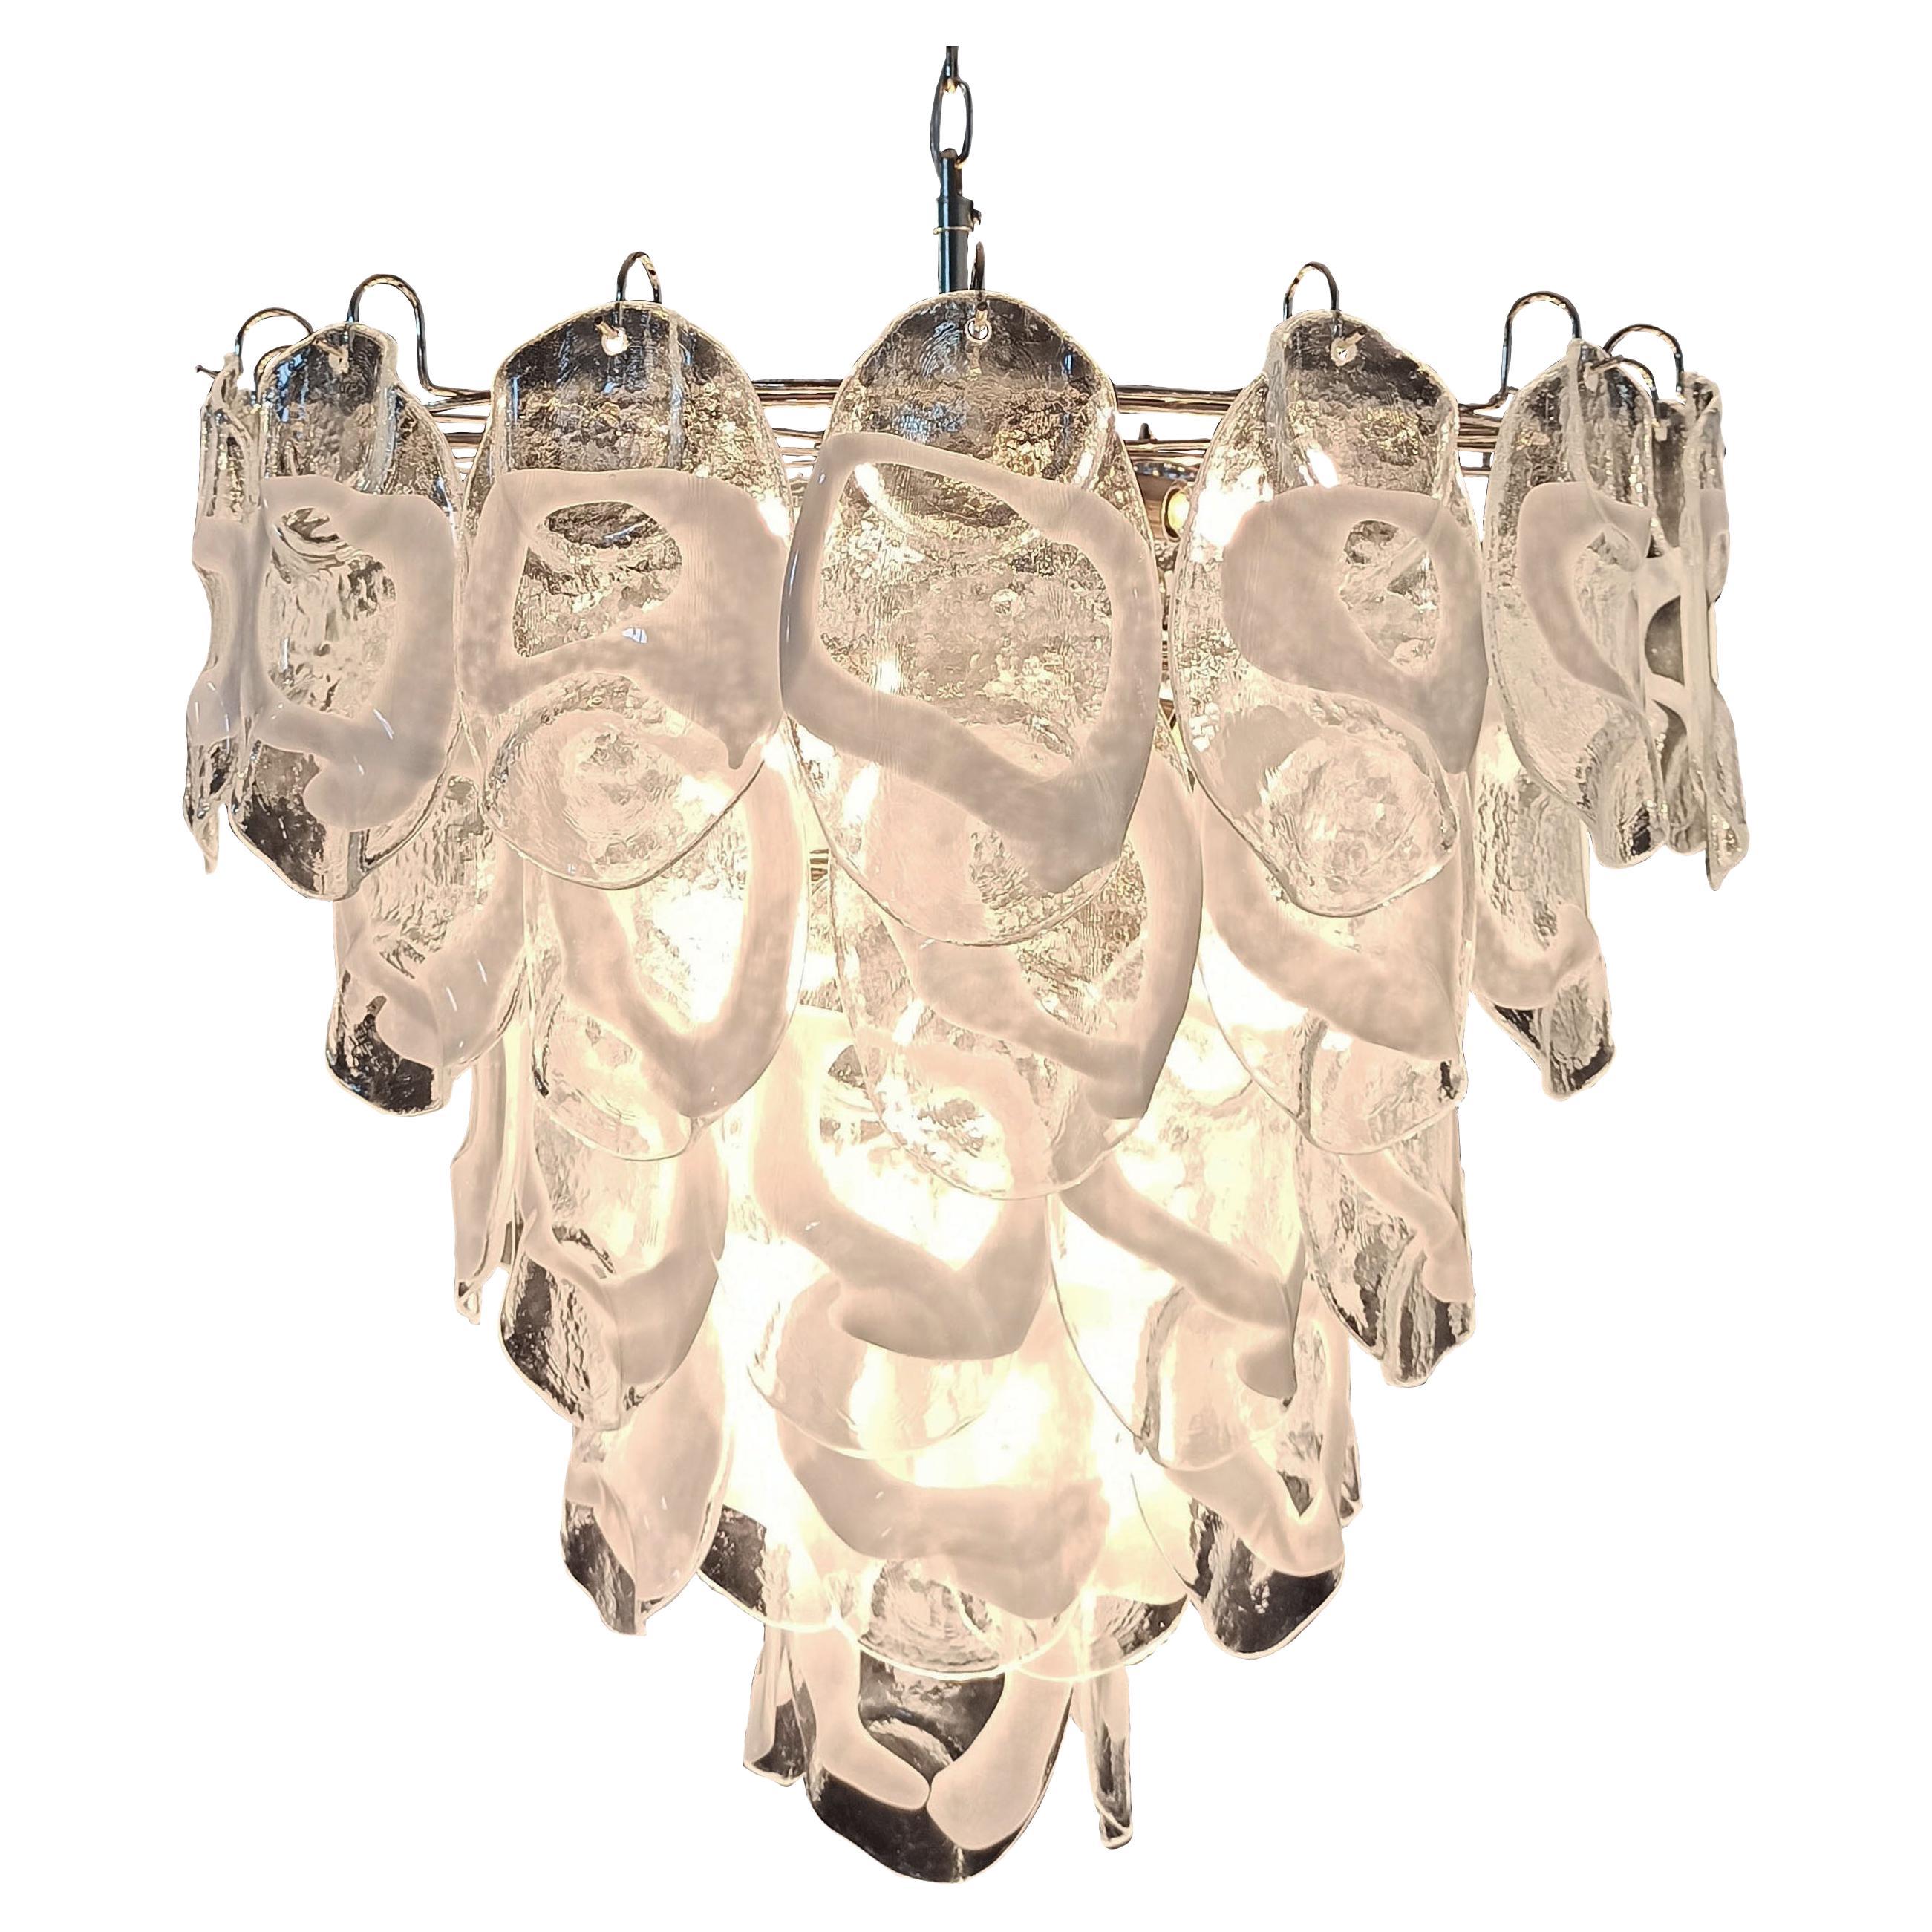 Amazing Huge Vintage Italian Murano chandelier lamp by Vistosi - 57 glasses For Sale